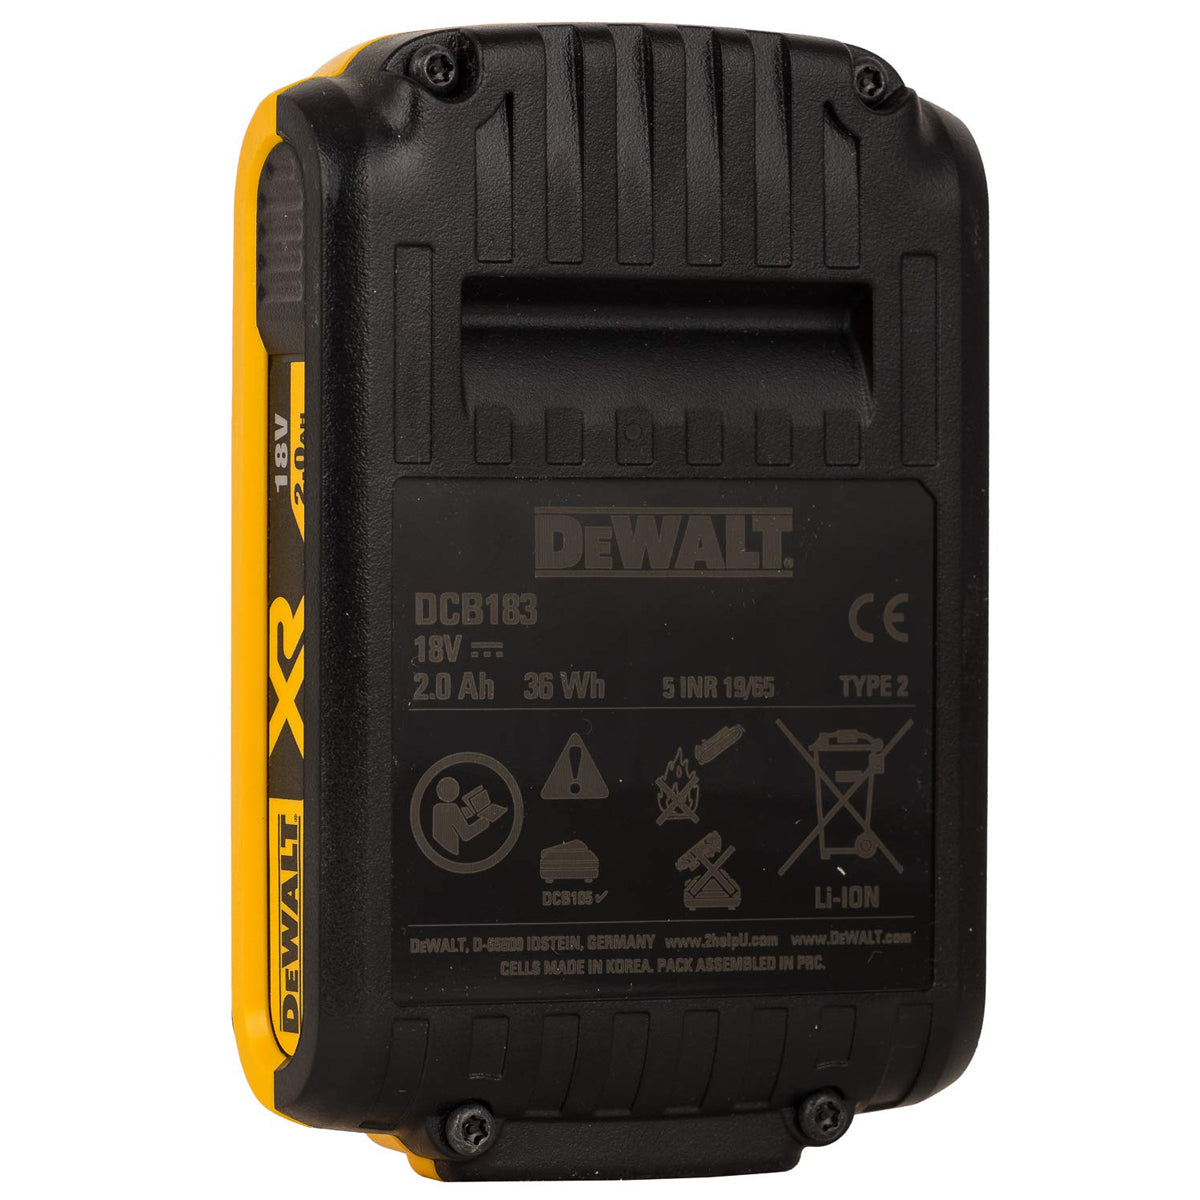 Dewalt Genuine DCB183 18V XR Li-ion 2.0Ah Battery